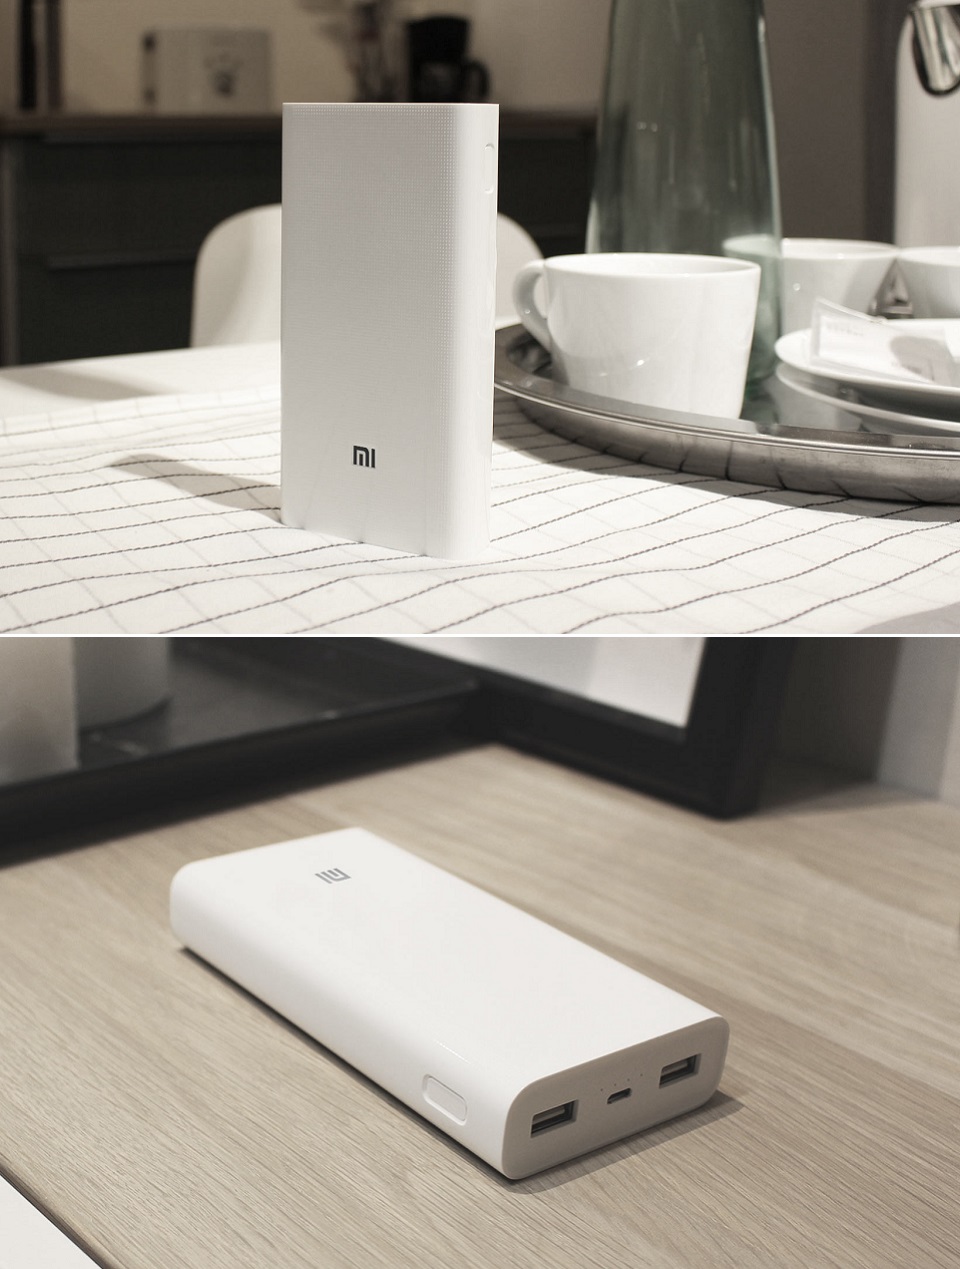 Универсальная батарея Xiaomi Mi power bank 2 White 20000mAh на разных поверхностях